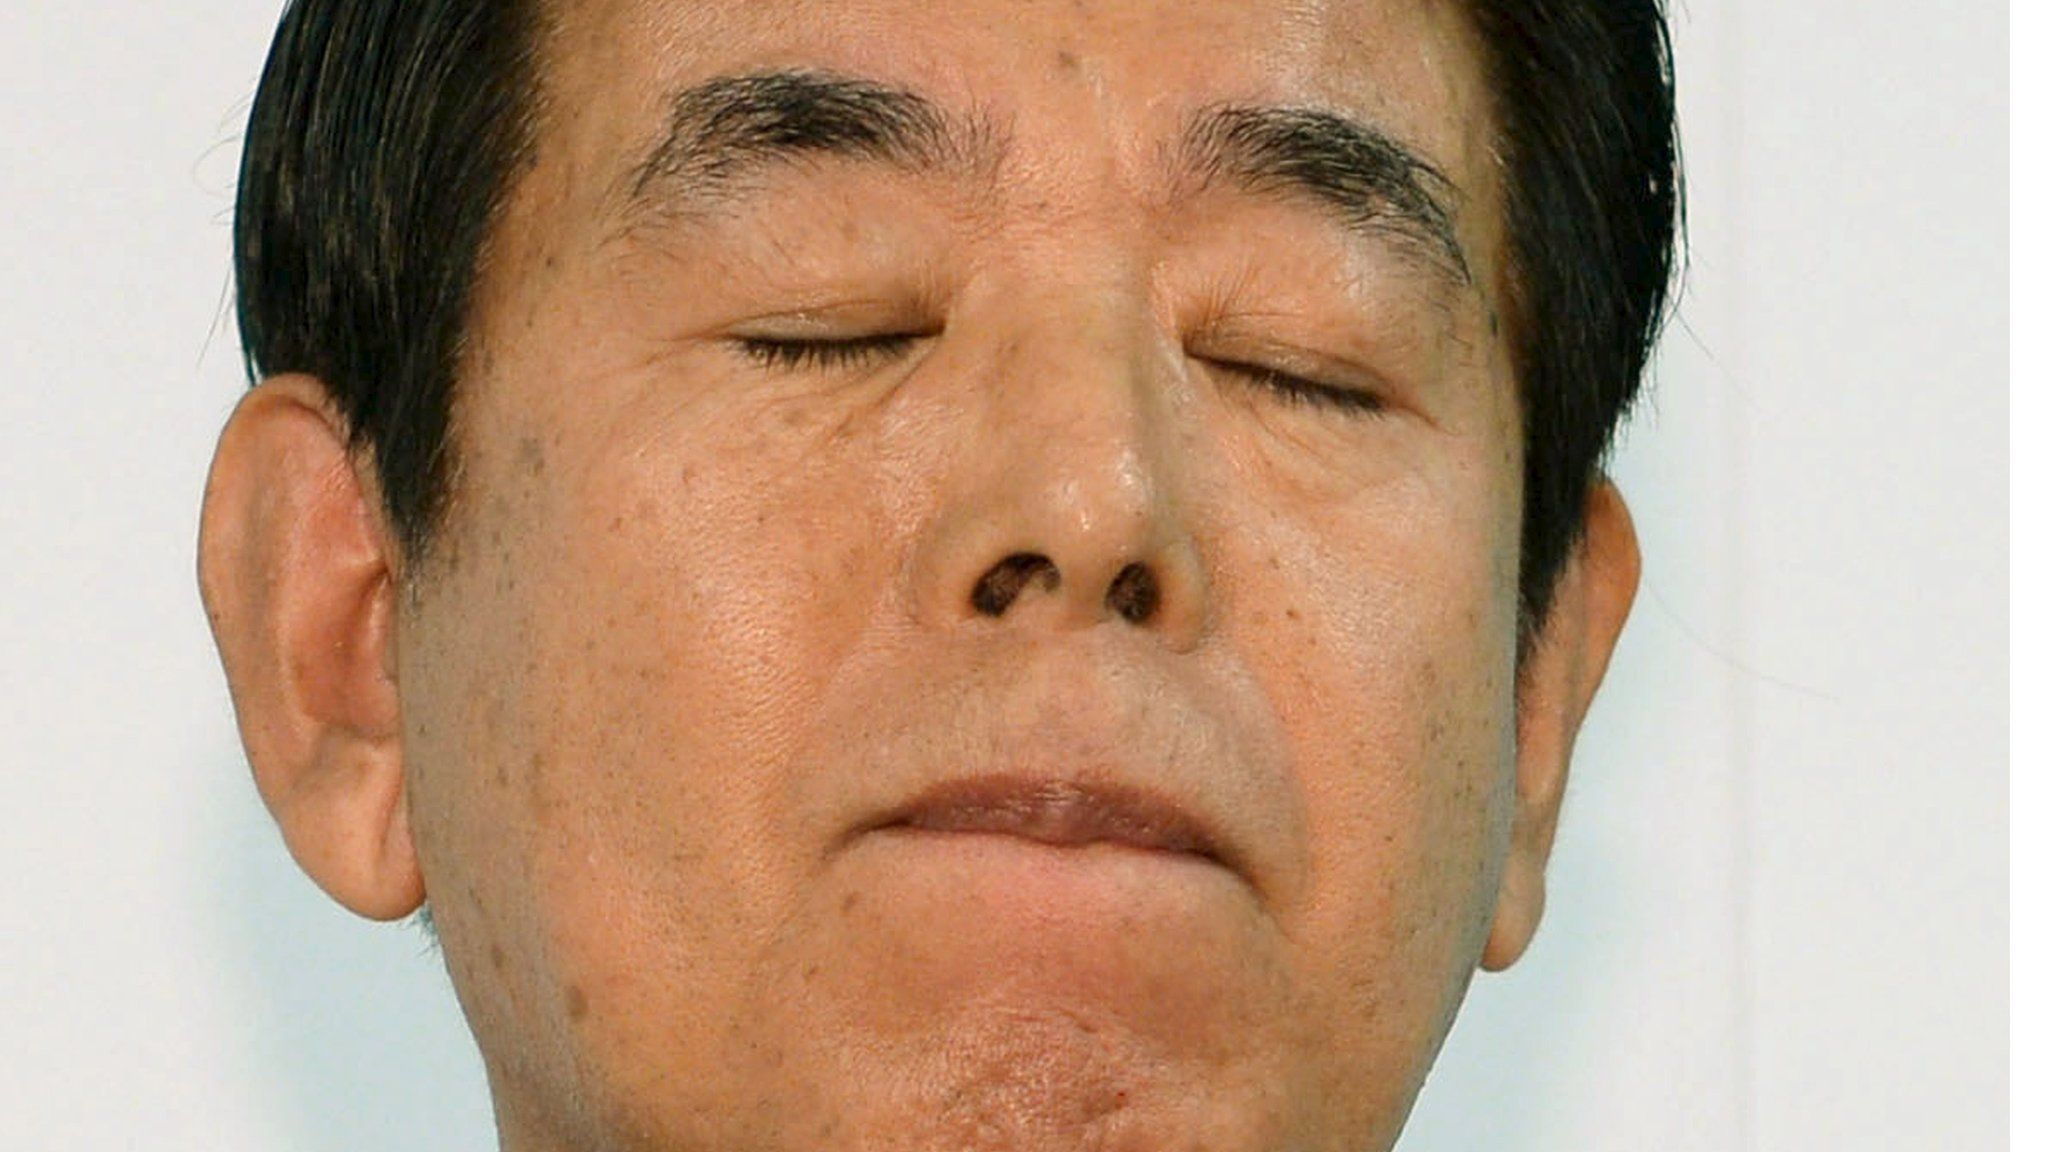 Hakubun Shimomura, Minister of Education, Culture, Sports, Science and Technology